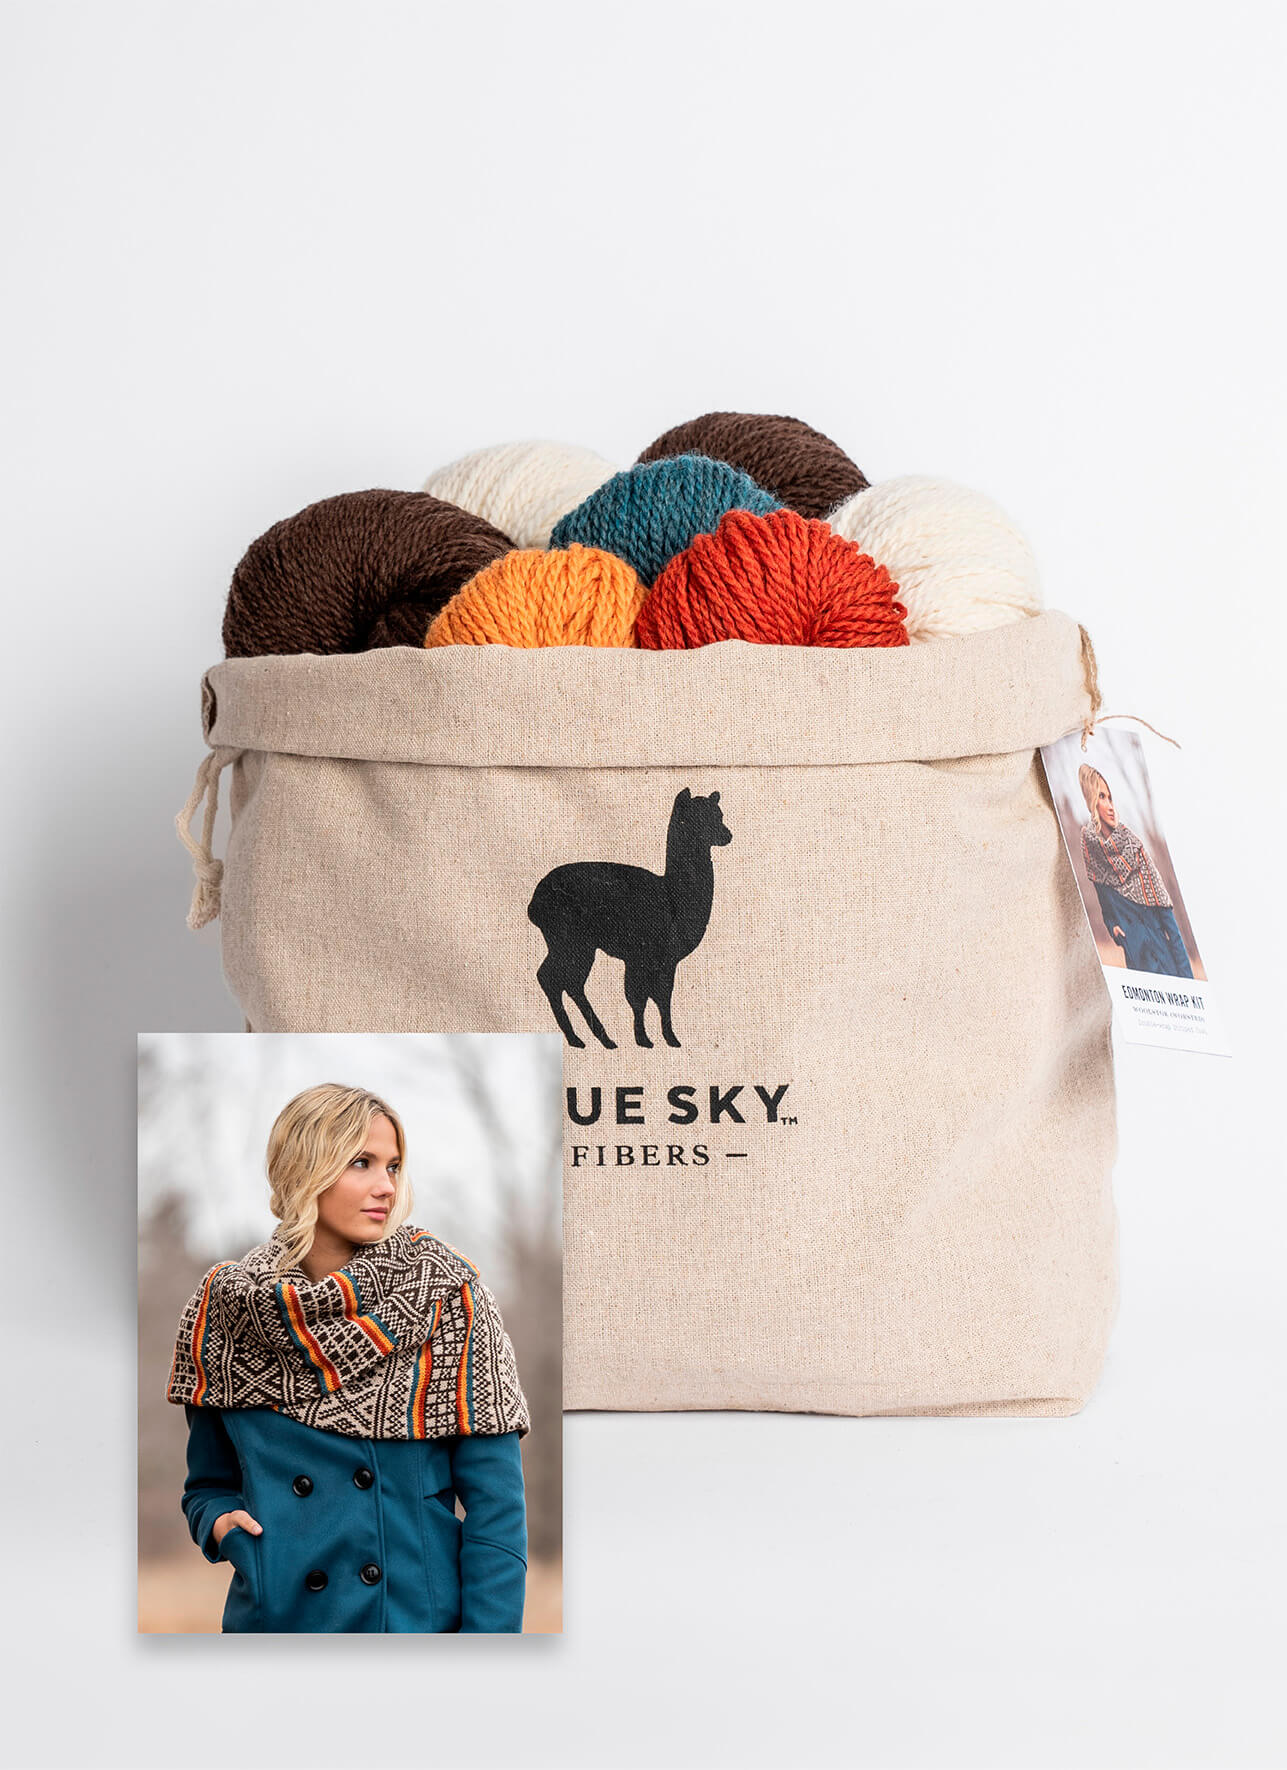 Persimmon Wrap Kit by Blue Sky Fibers – The Yarn Studio